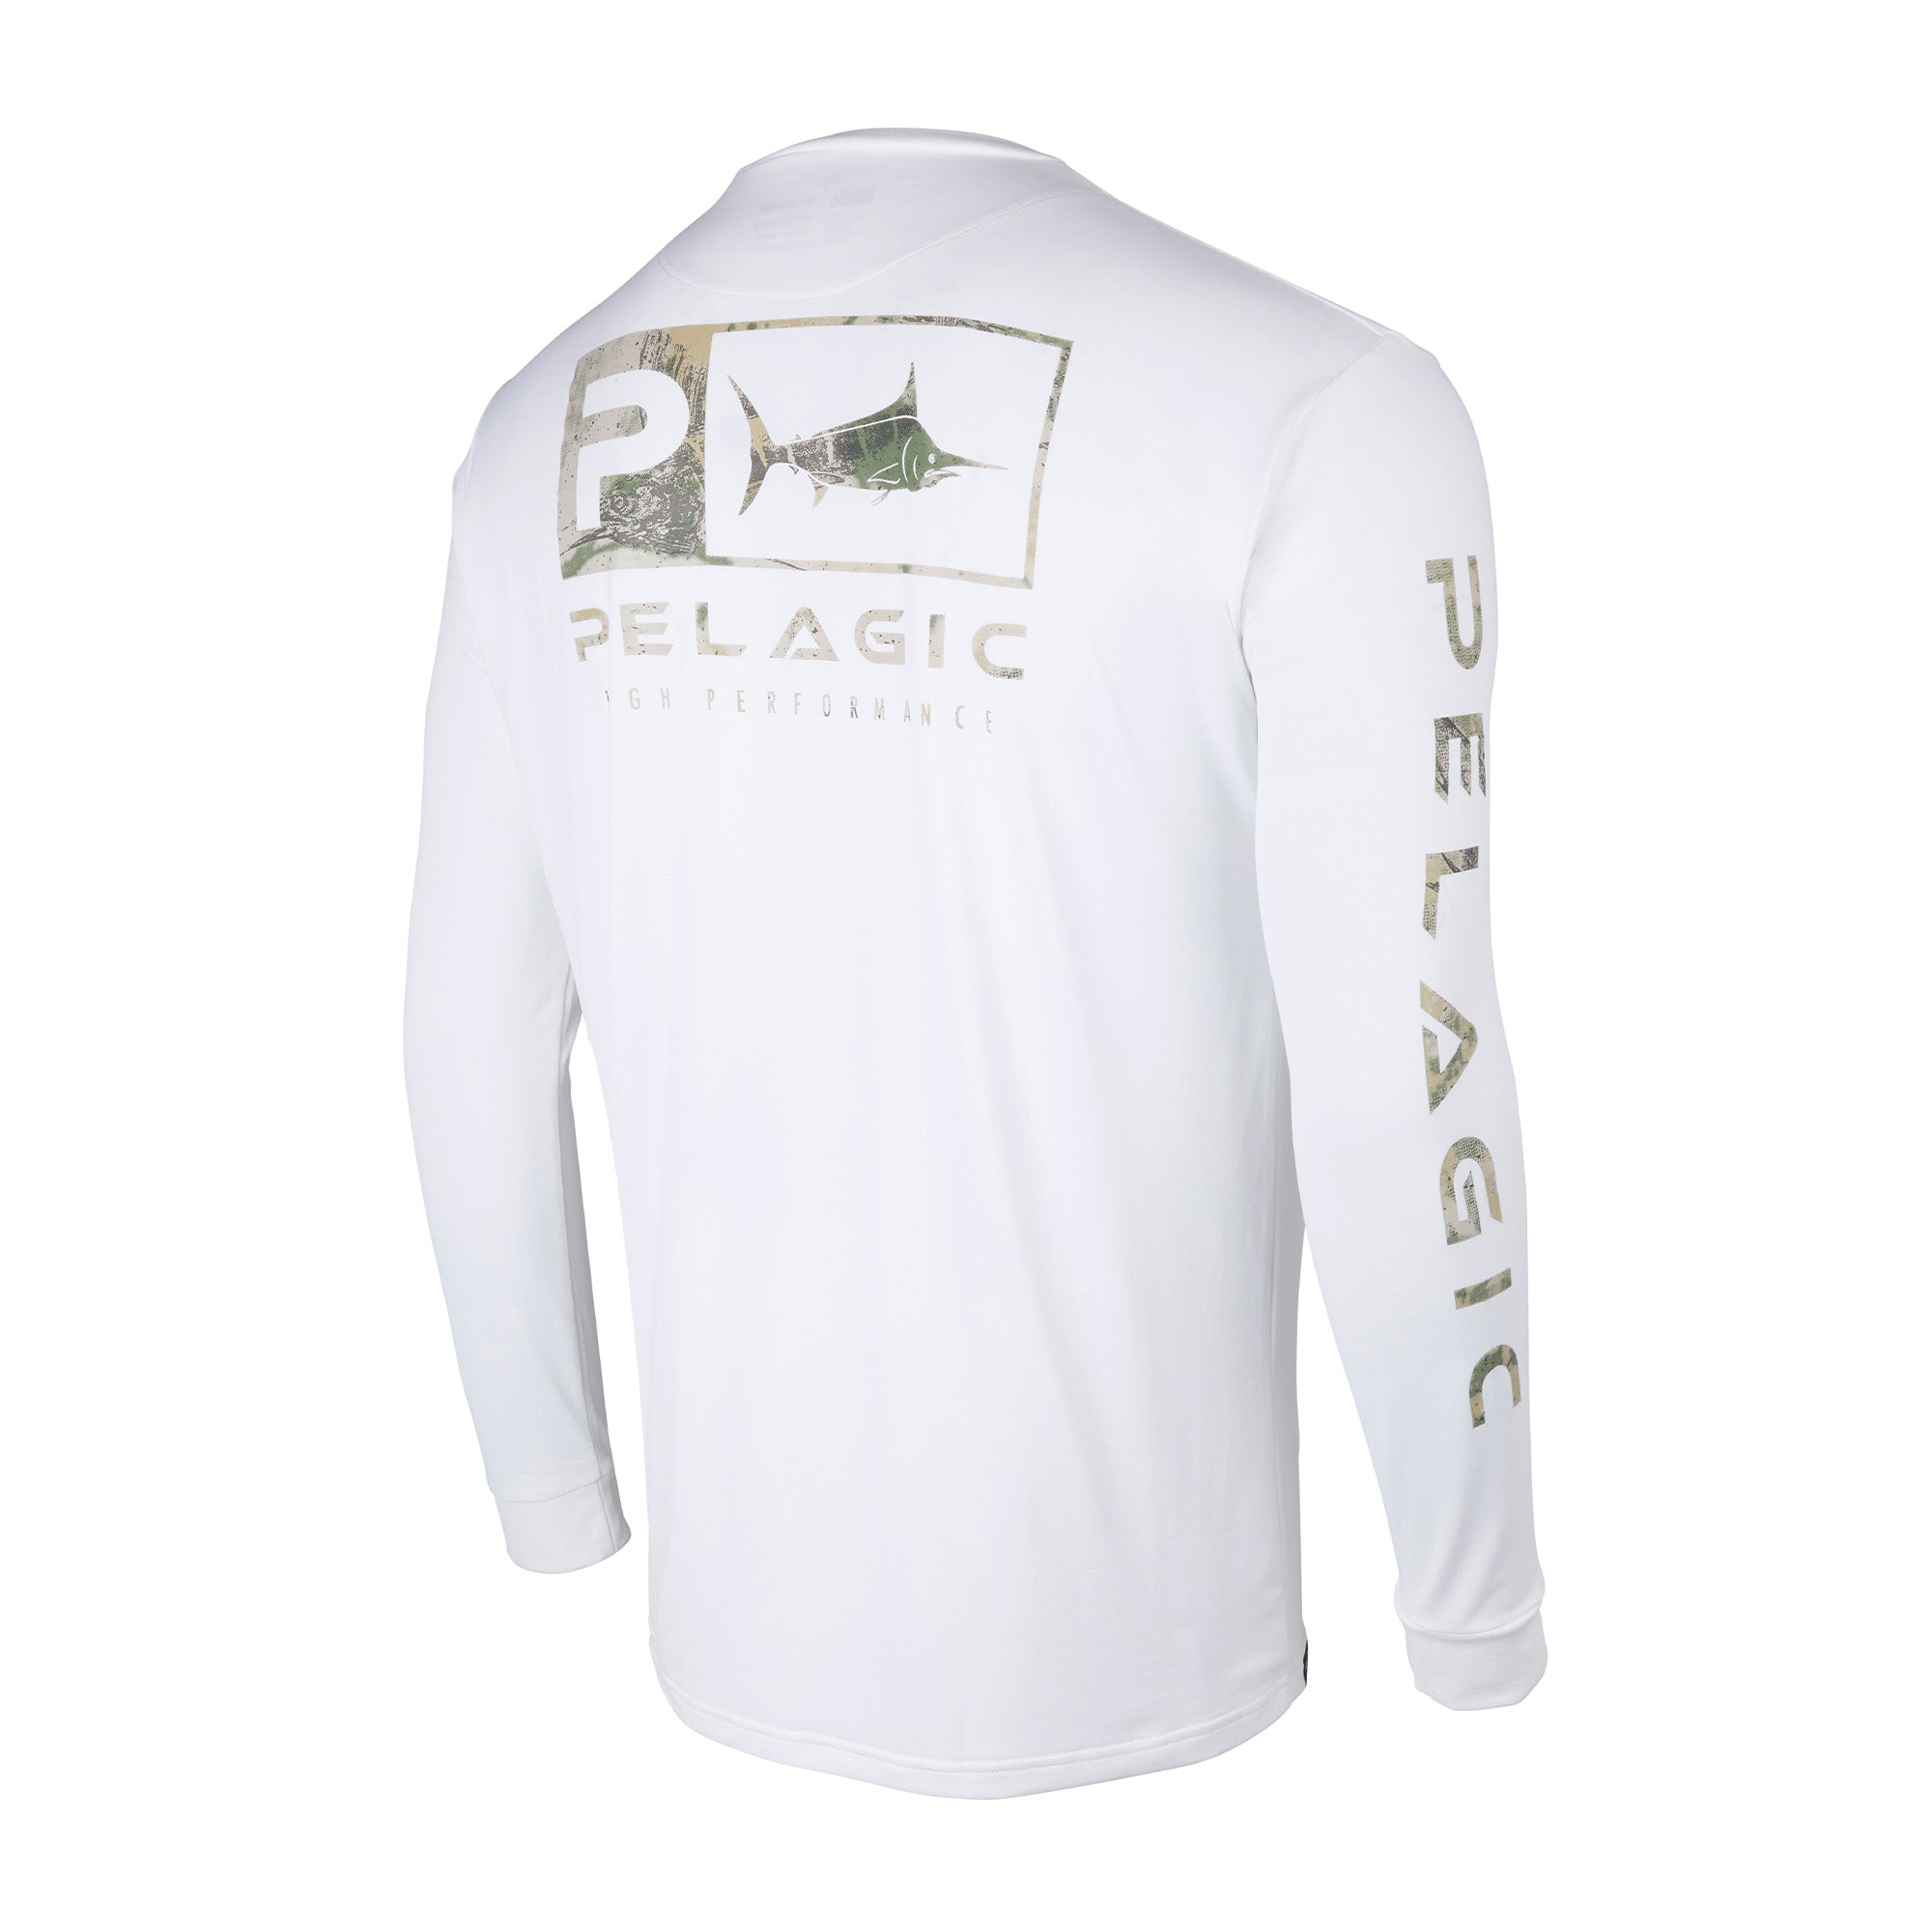 Pelagic Men's Fishing Shirts – Pelagic New Zealand